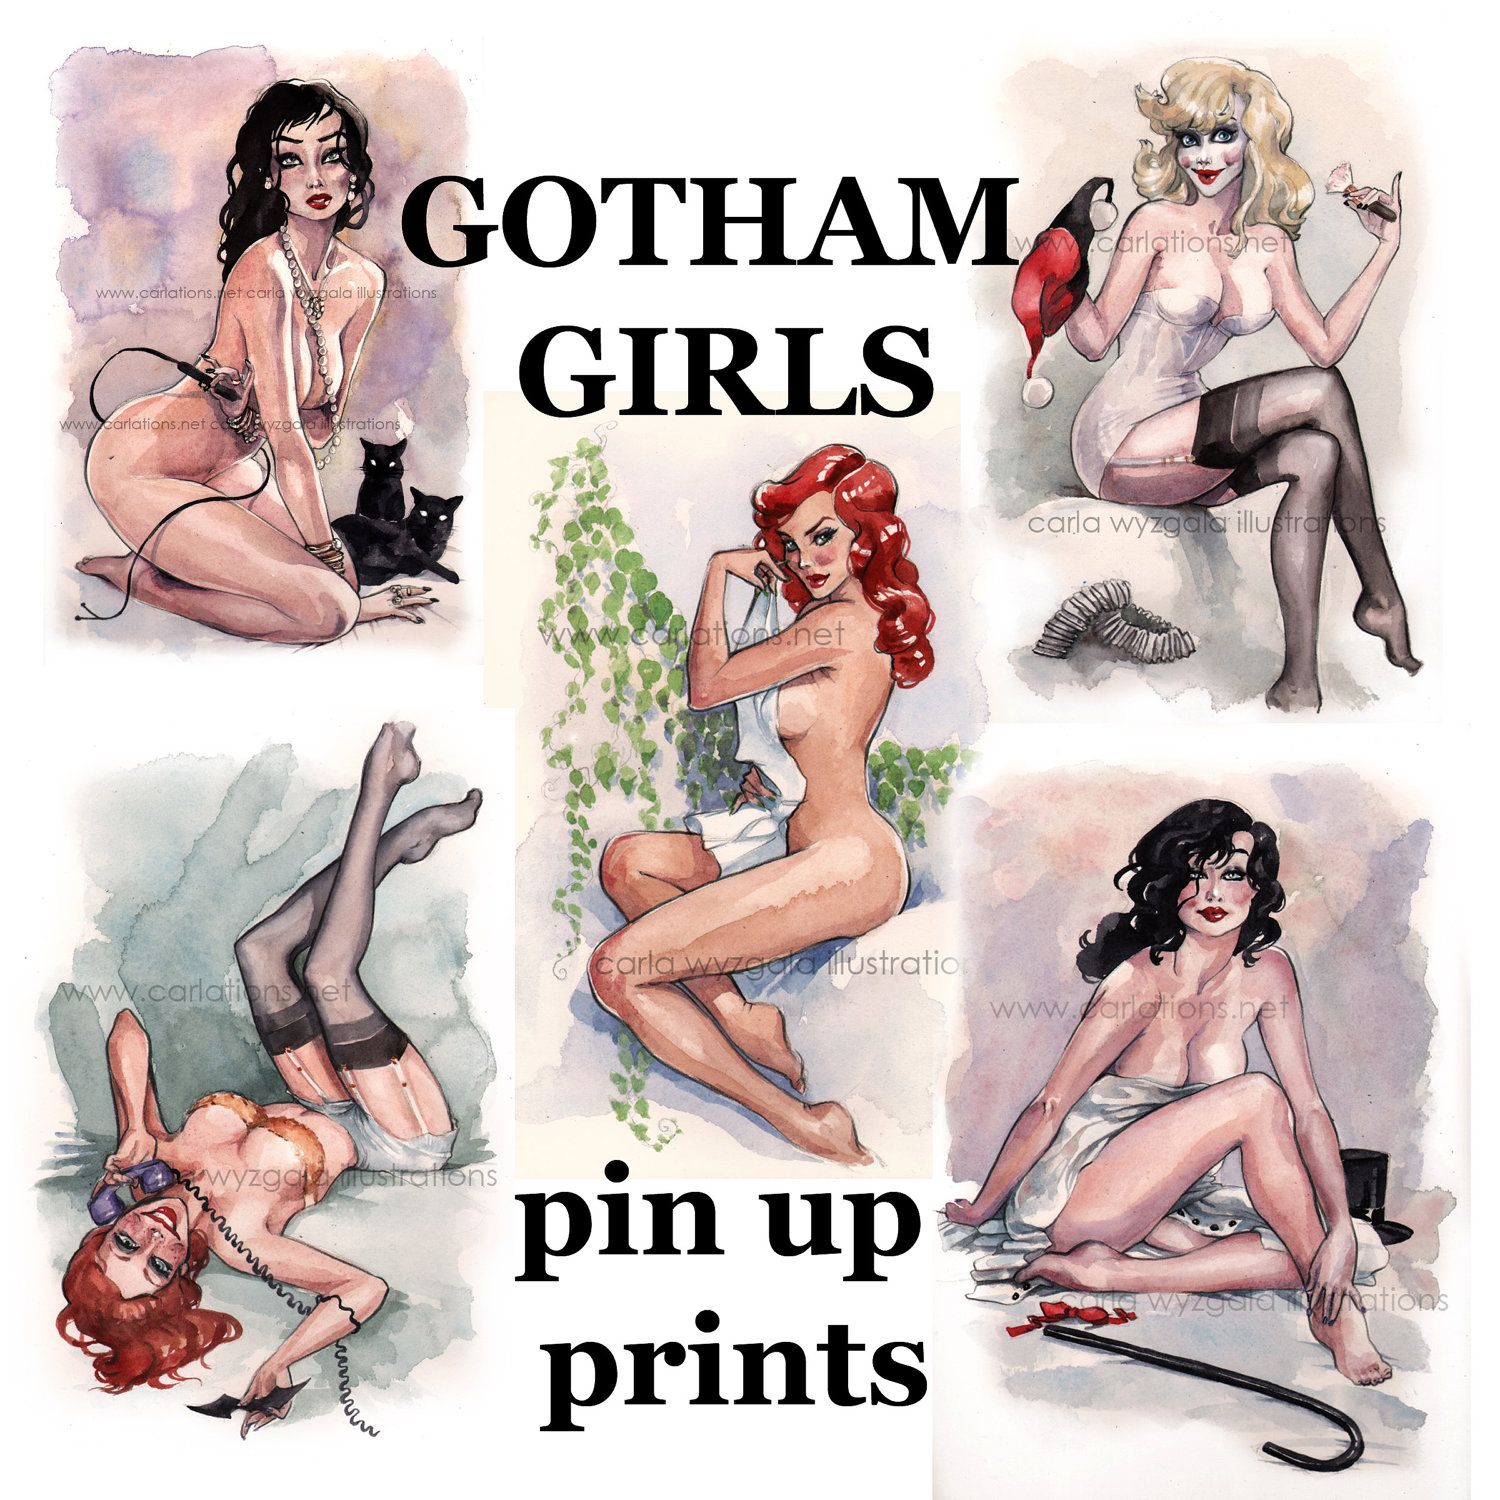 Cartoon Art Pin Up Girls - batman pin up prints carlationsart on etsy comic - XXXPicz